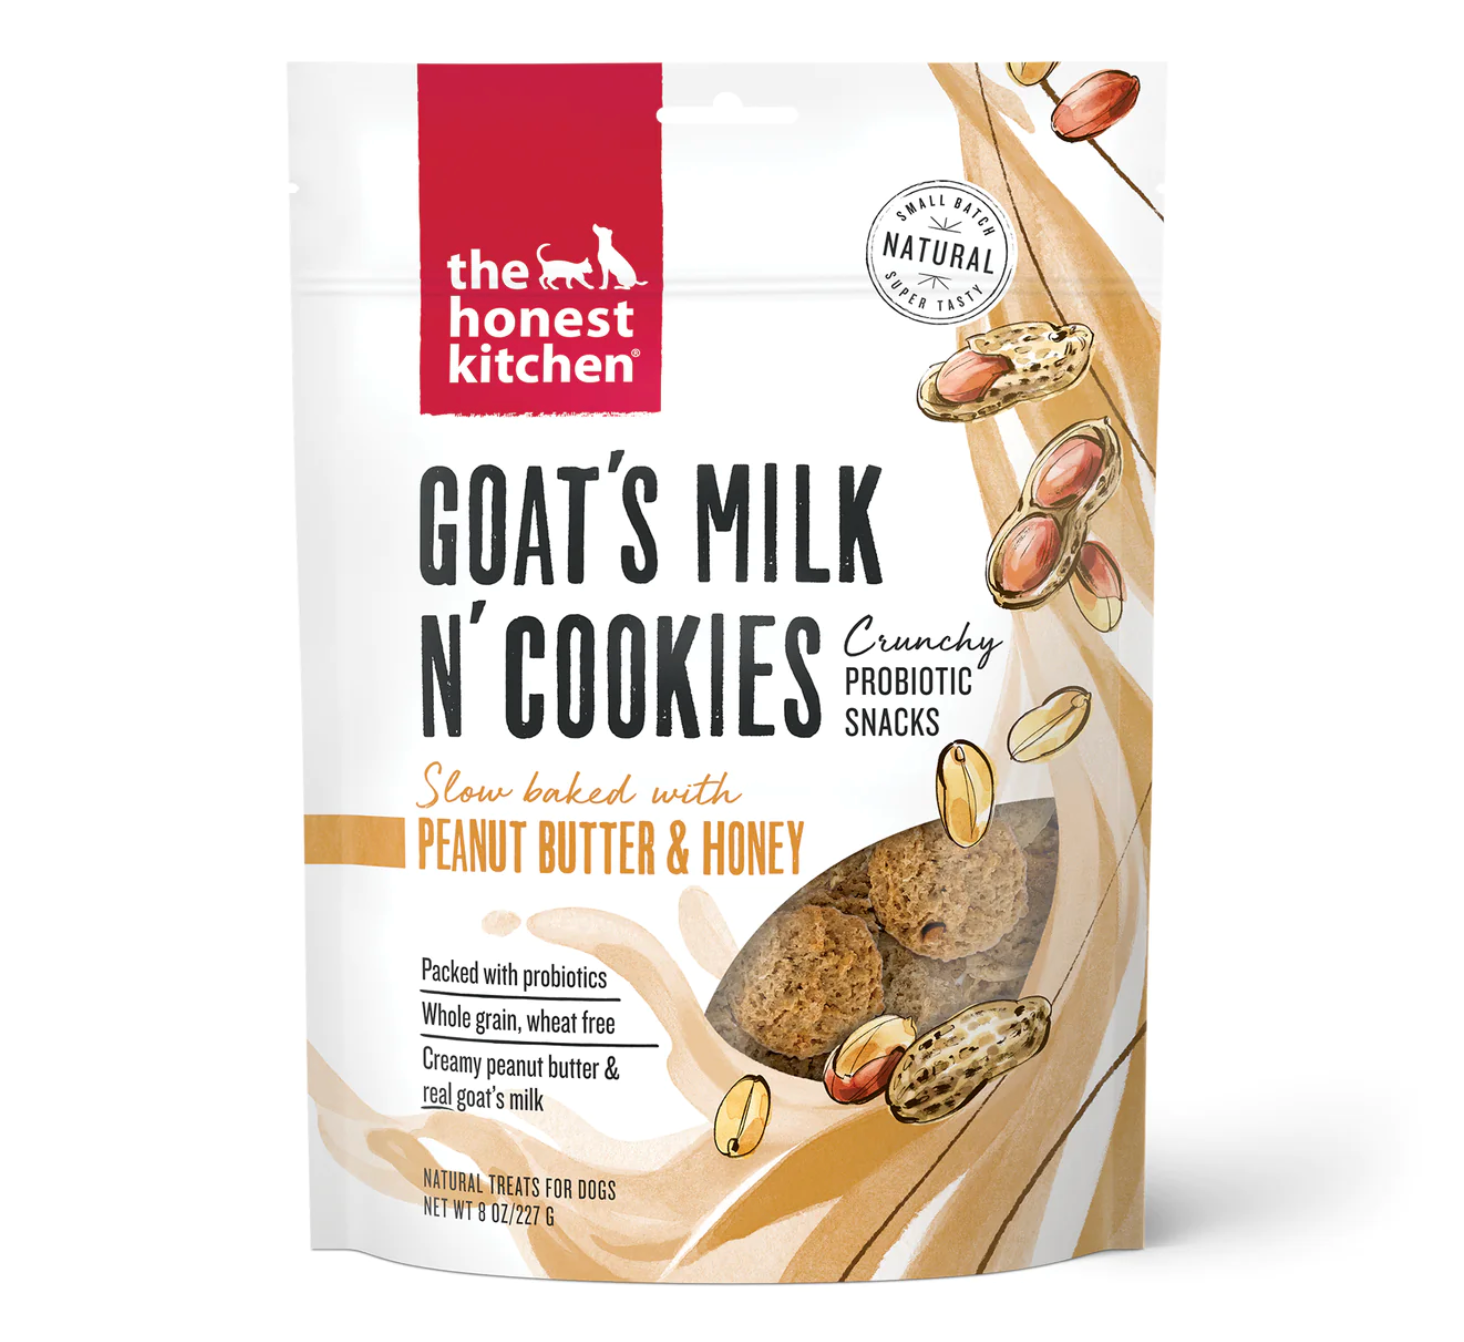 The Honest Kitchen Goat's Milk N Cookies for Dogs, Peanut Butter & Honey